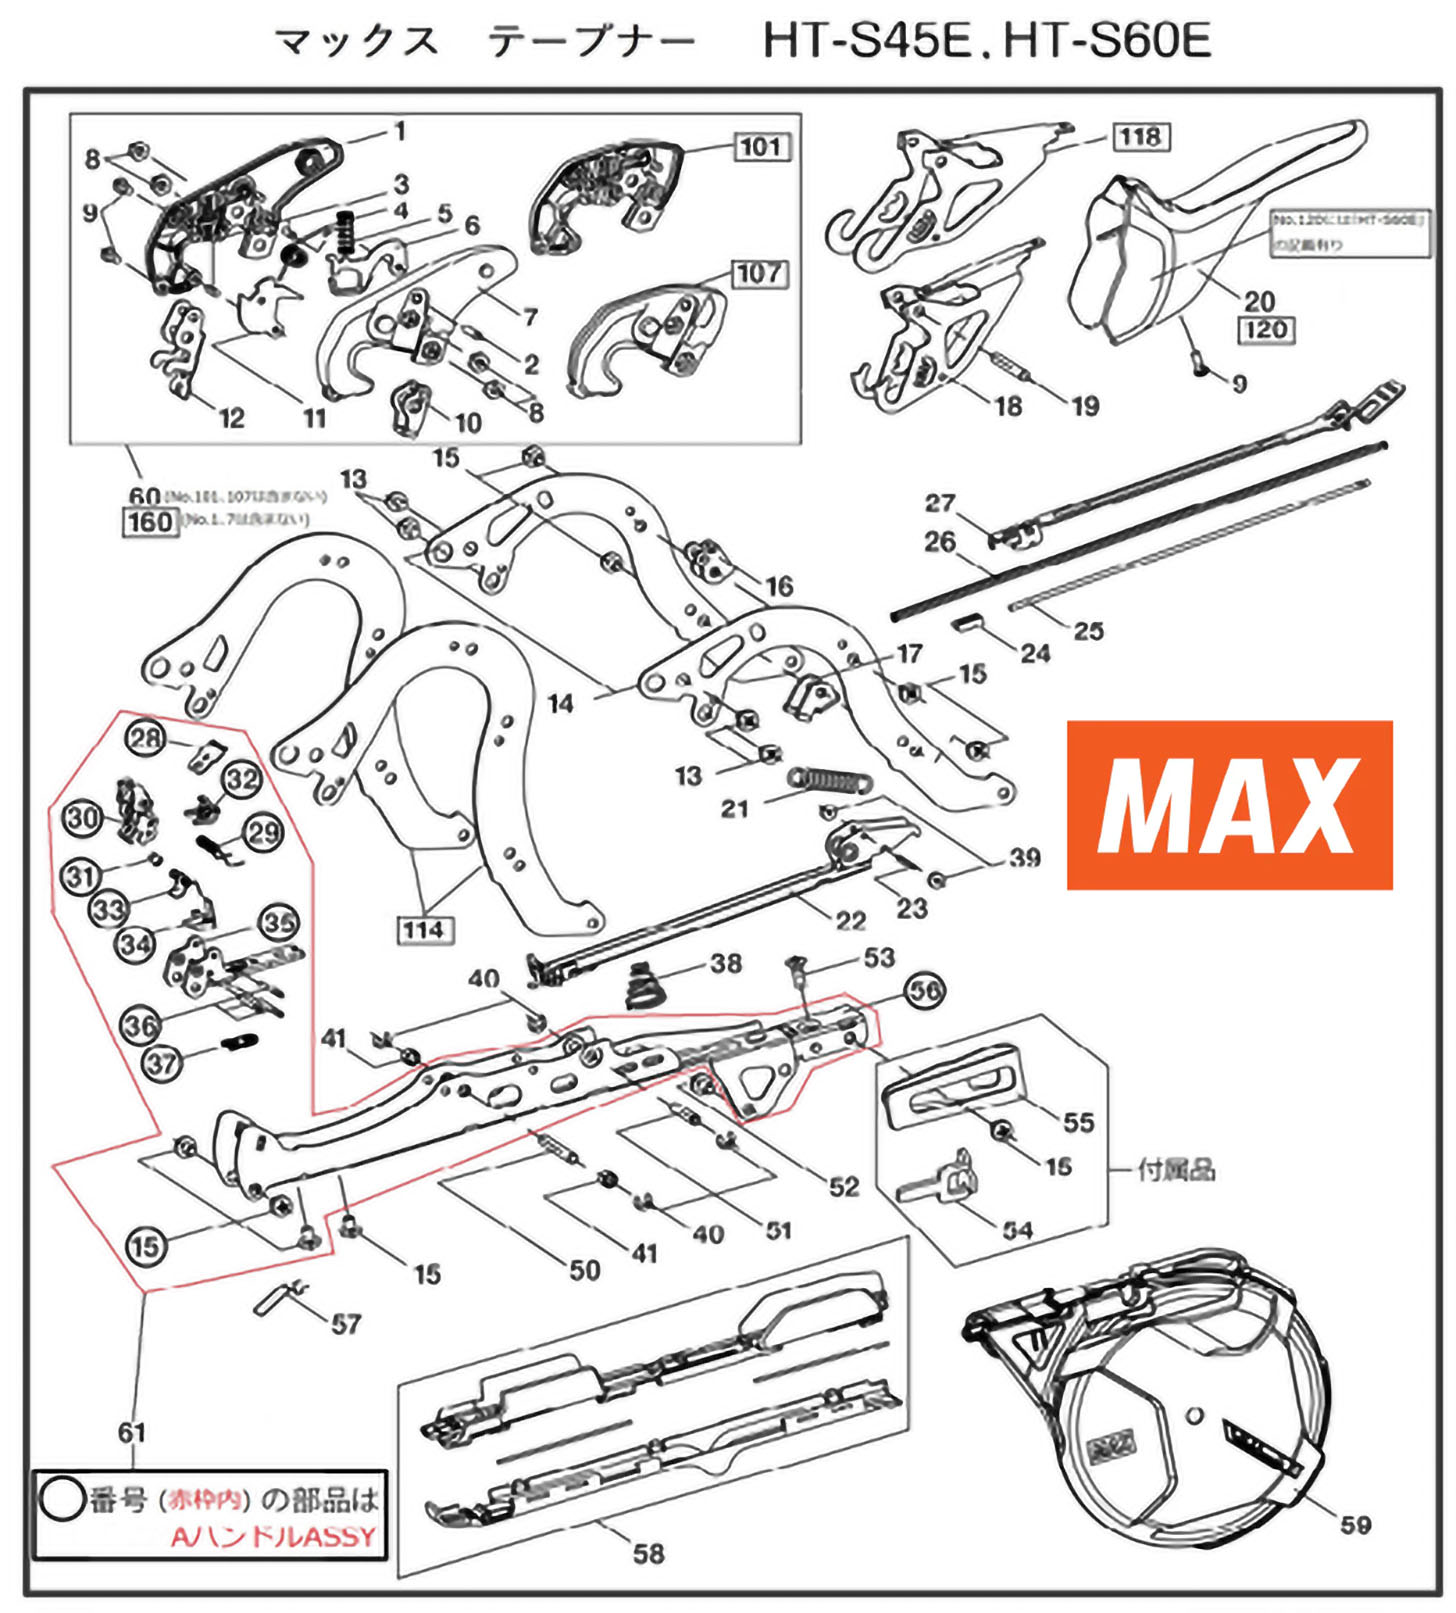 MAX Tapener Part KK13405 EXTENSION SPRING 3405 Fits MAX HT-S45E #21